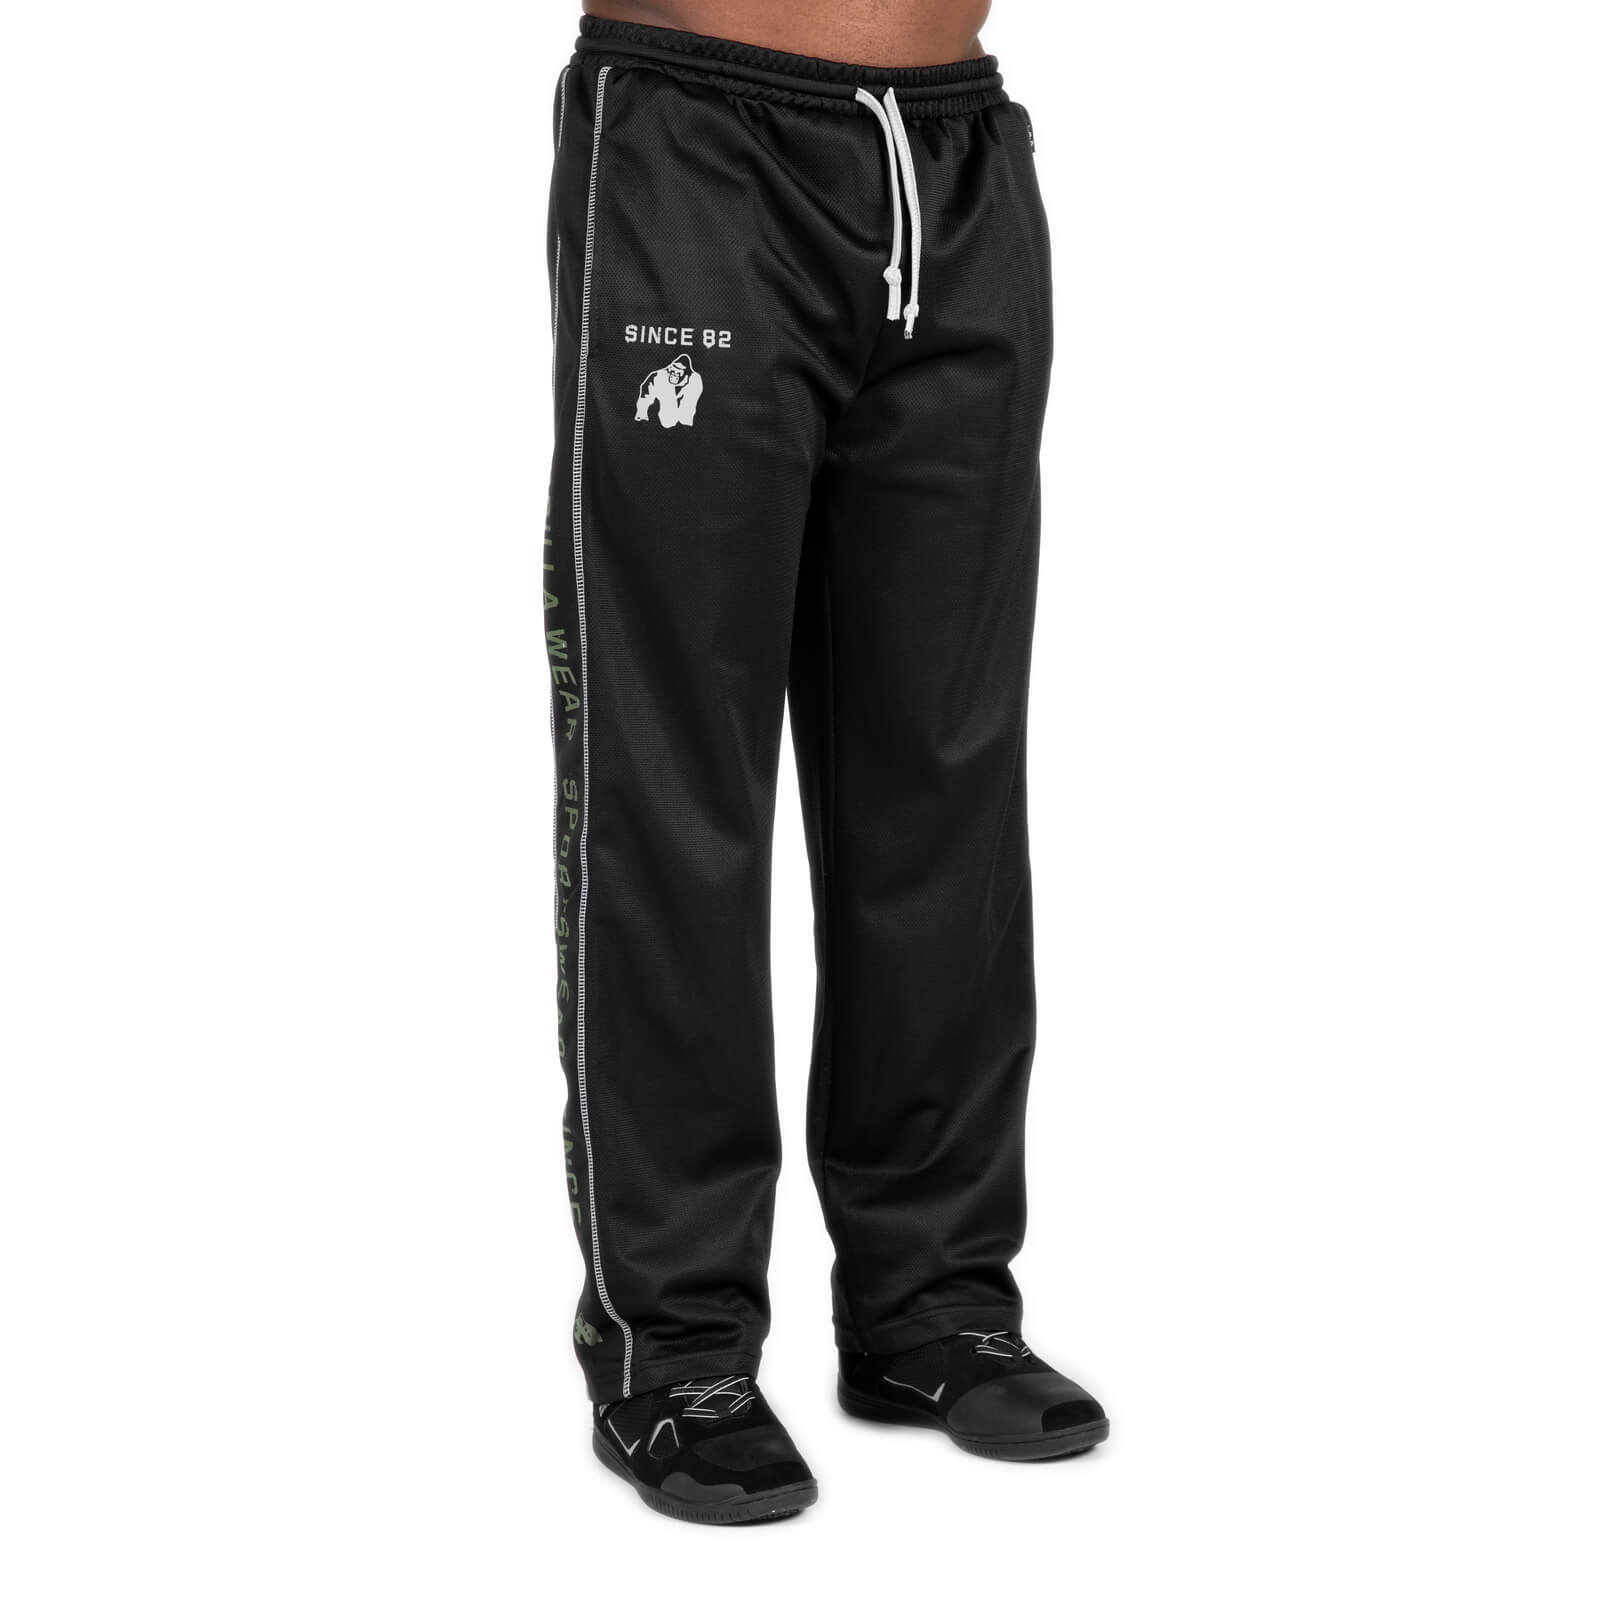 Kolla in Functional Mesh Pants, black/green, Gorilla Wear hos SportGymButiken.se